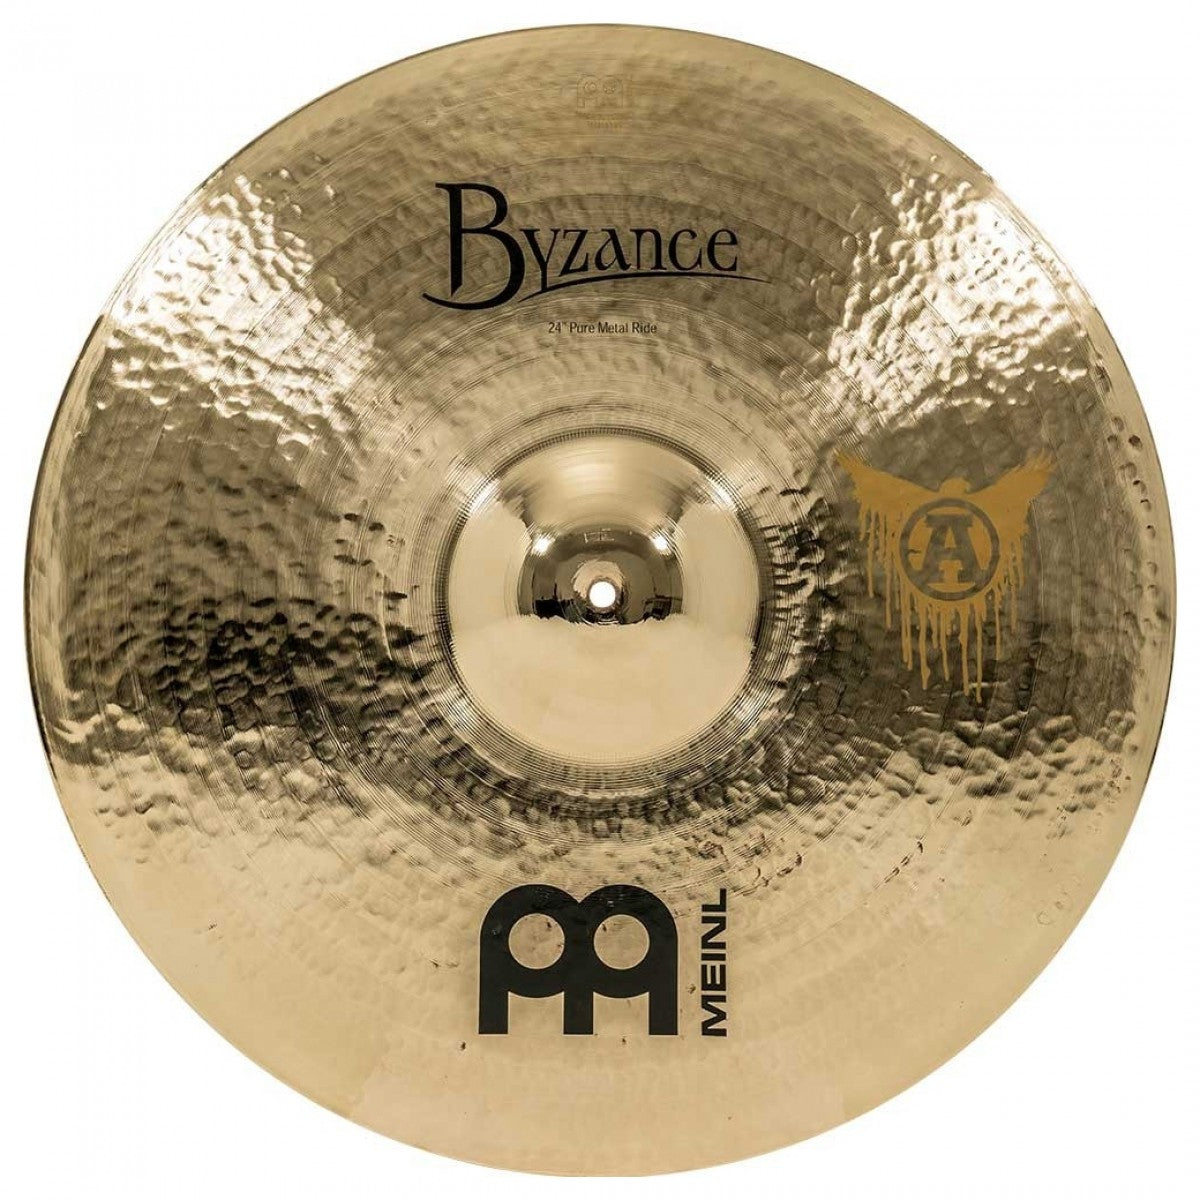 Cymbal Meinl Byzance Brilliant 24" Pure Metal Ride - B24PMR-B - Việt Music